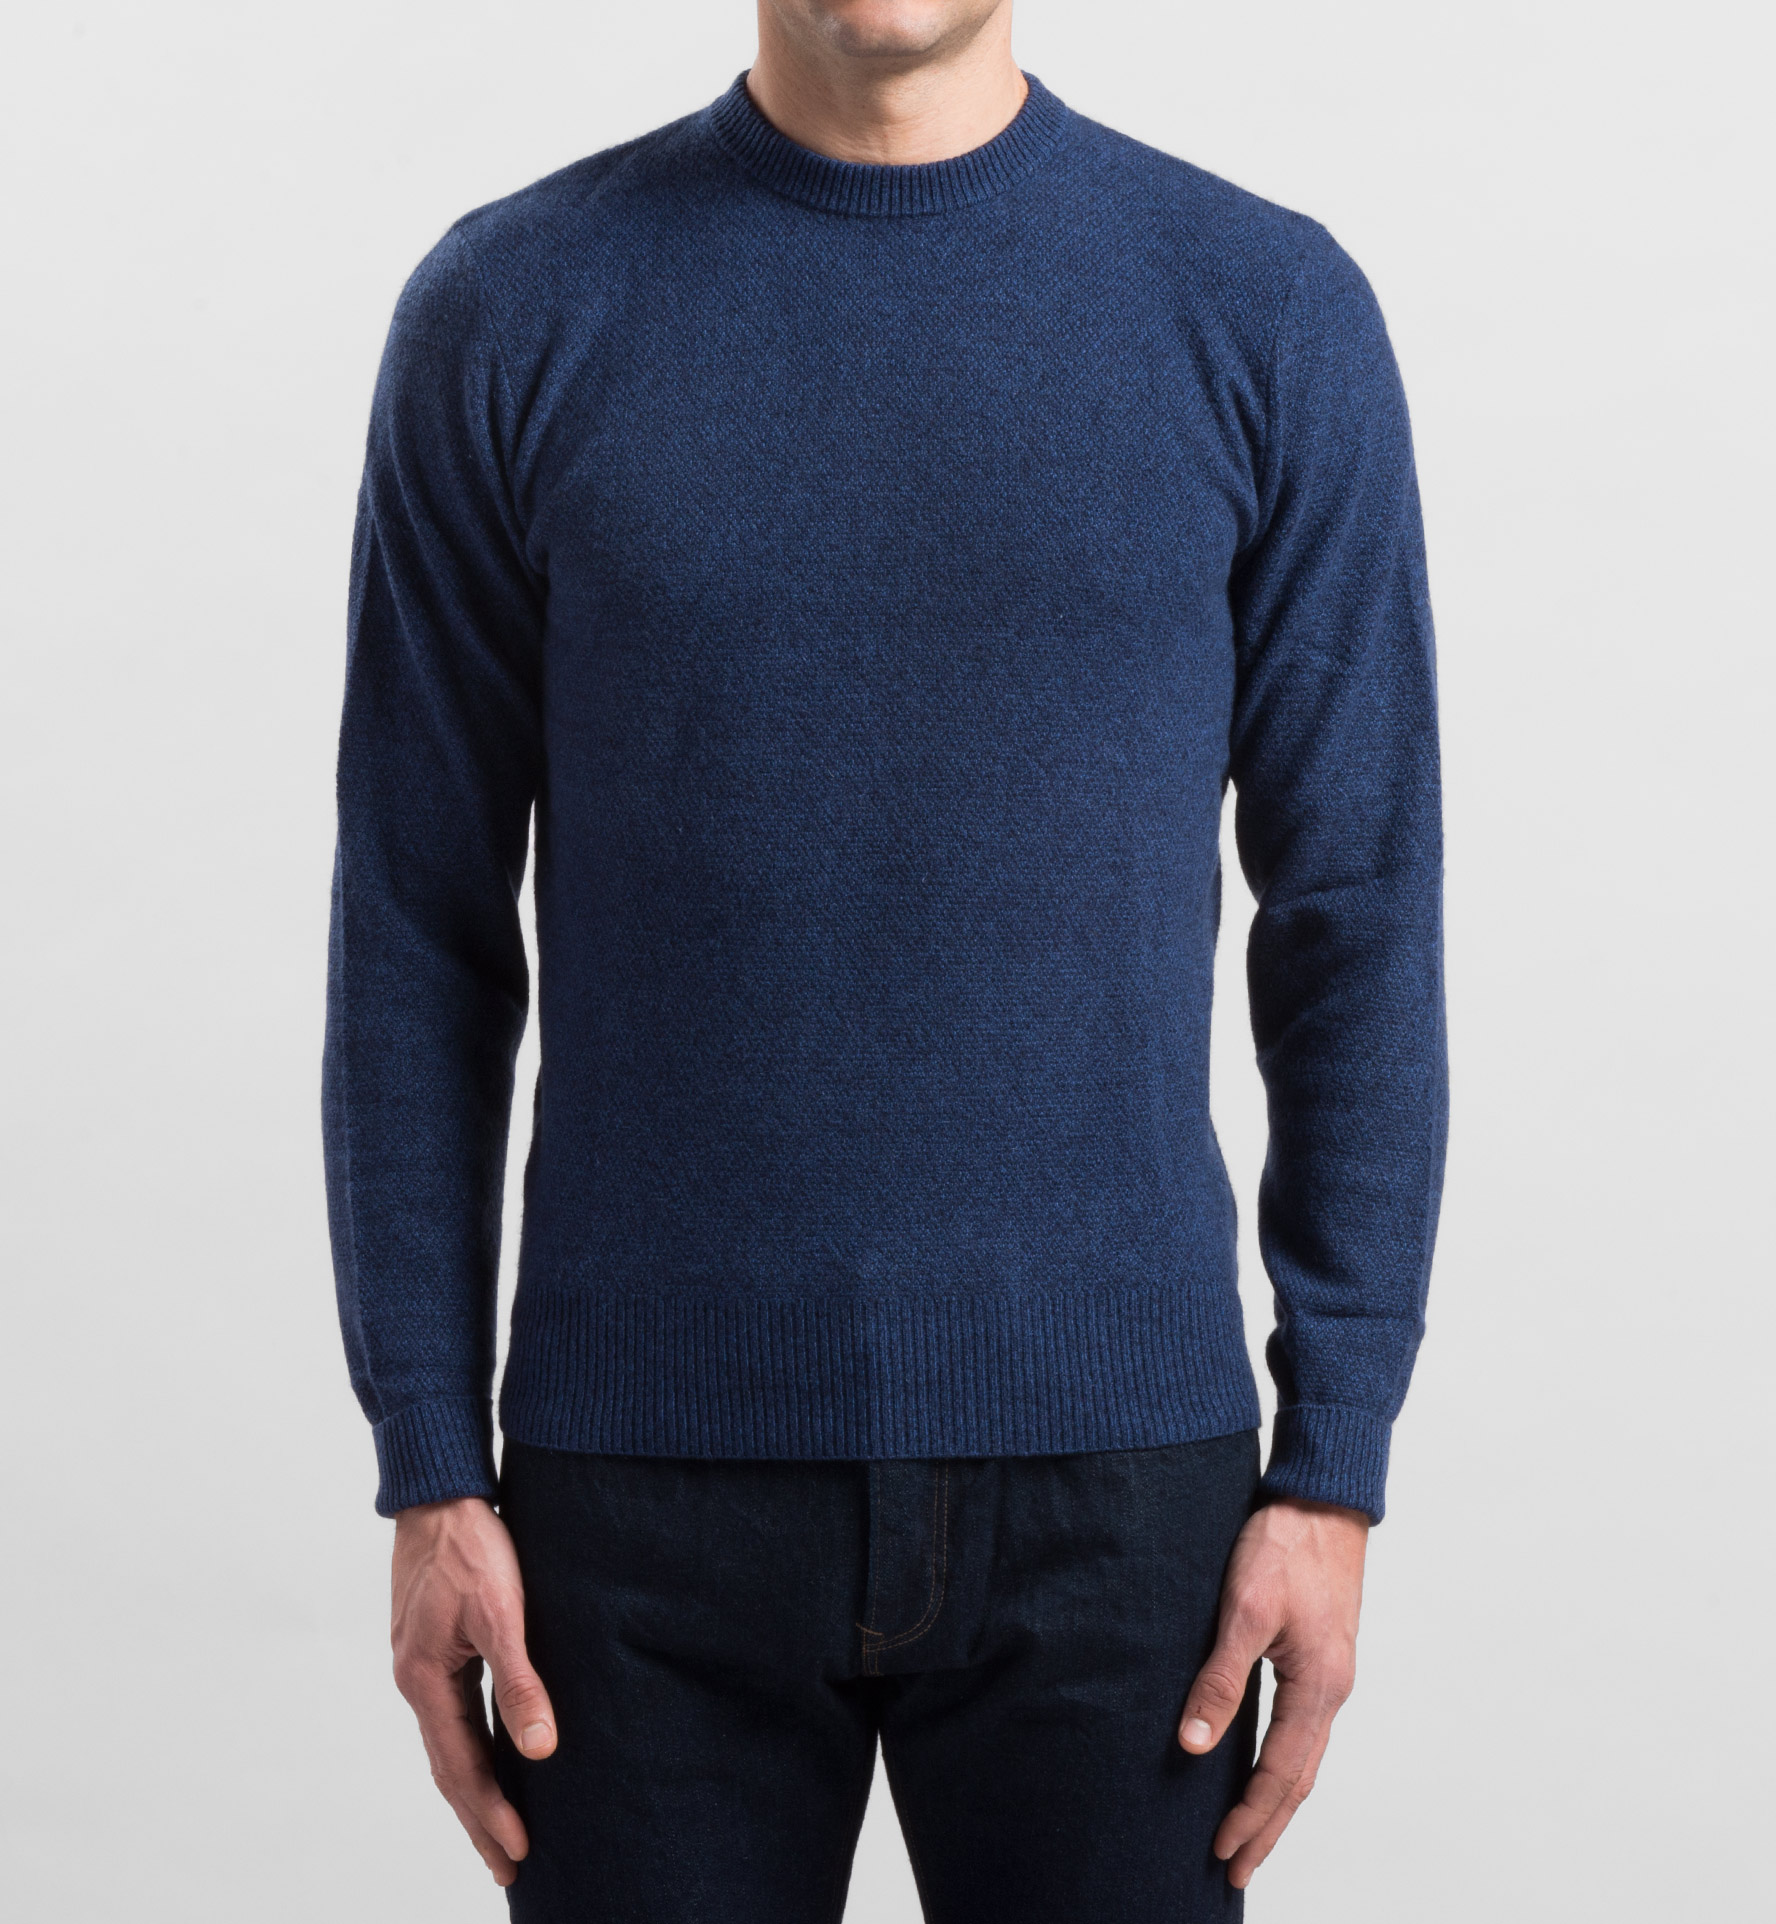 Indigo Cobble Stitch Cashmere Sweater by Proper Cloth